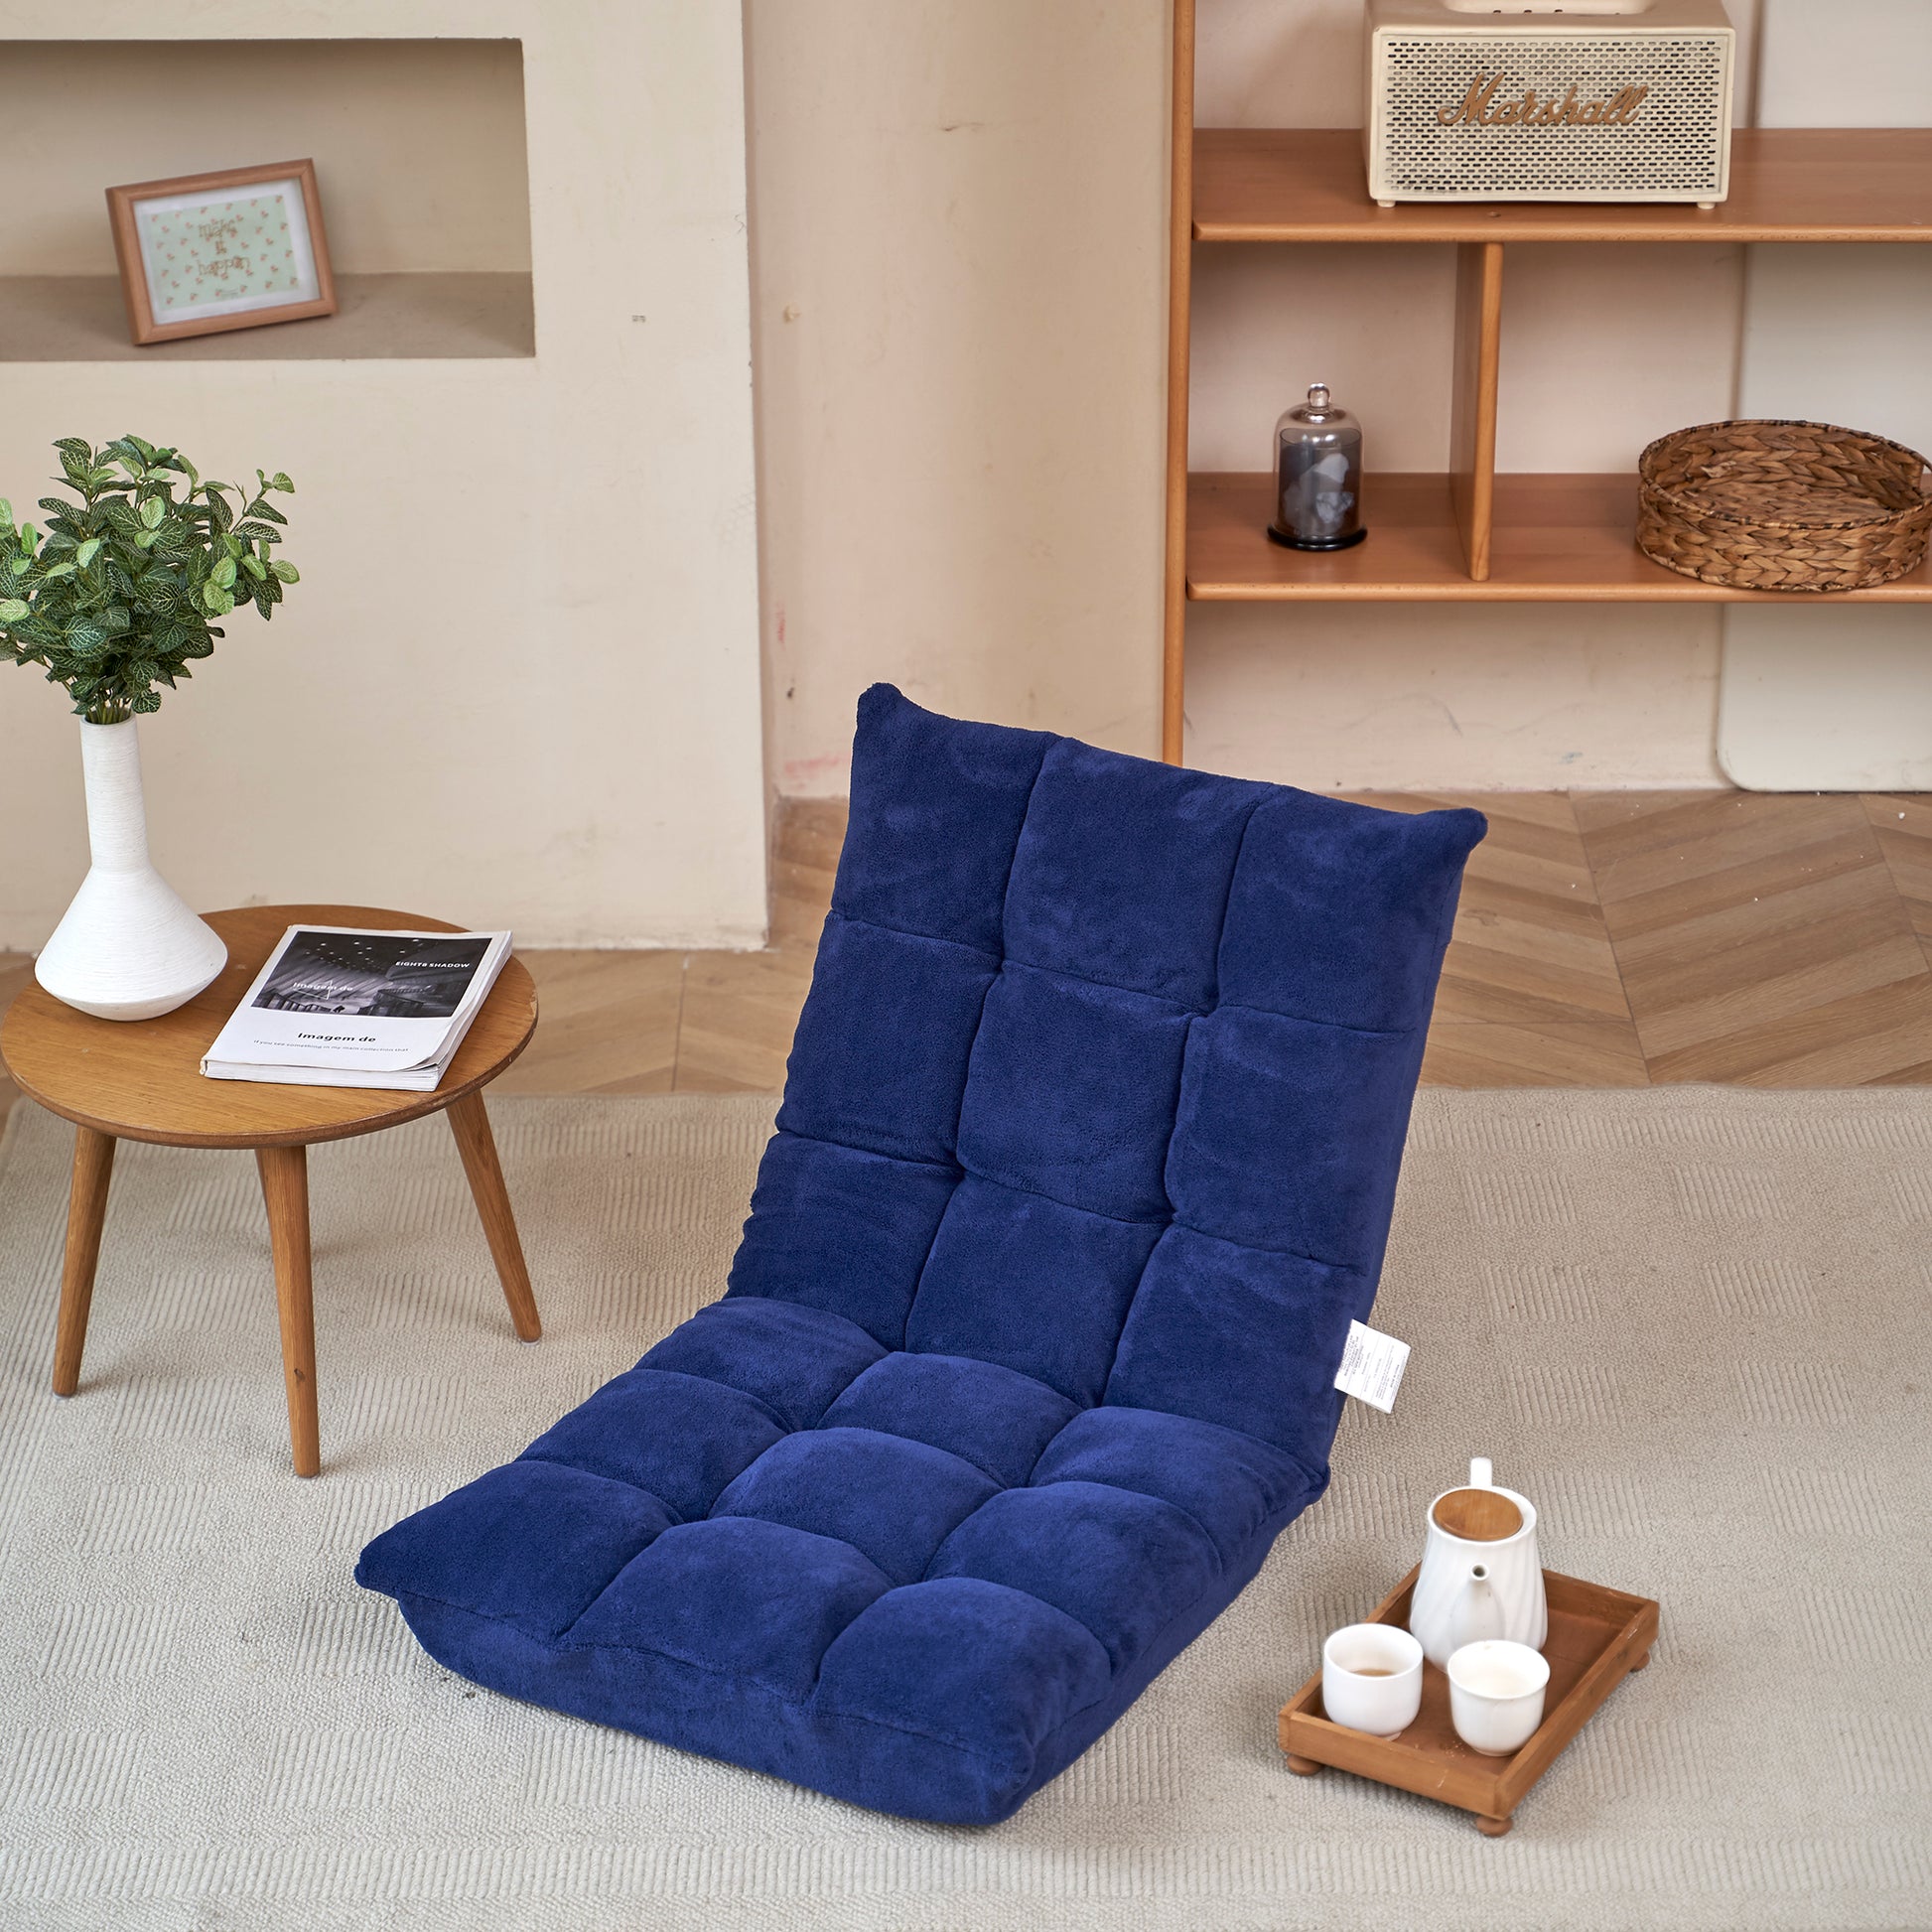 Sofa, Couch Sofa, Livingroom Furniture. Raee-Industries.